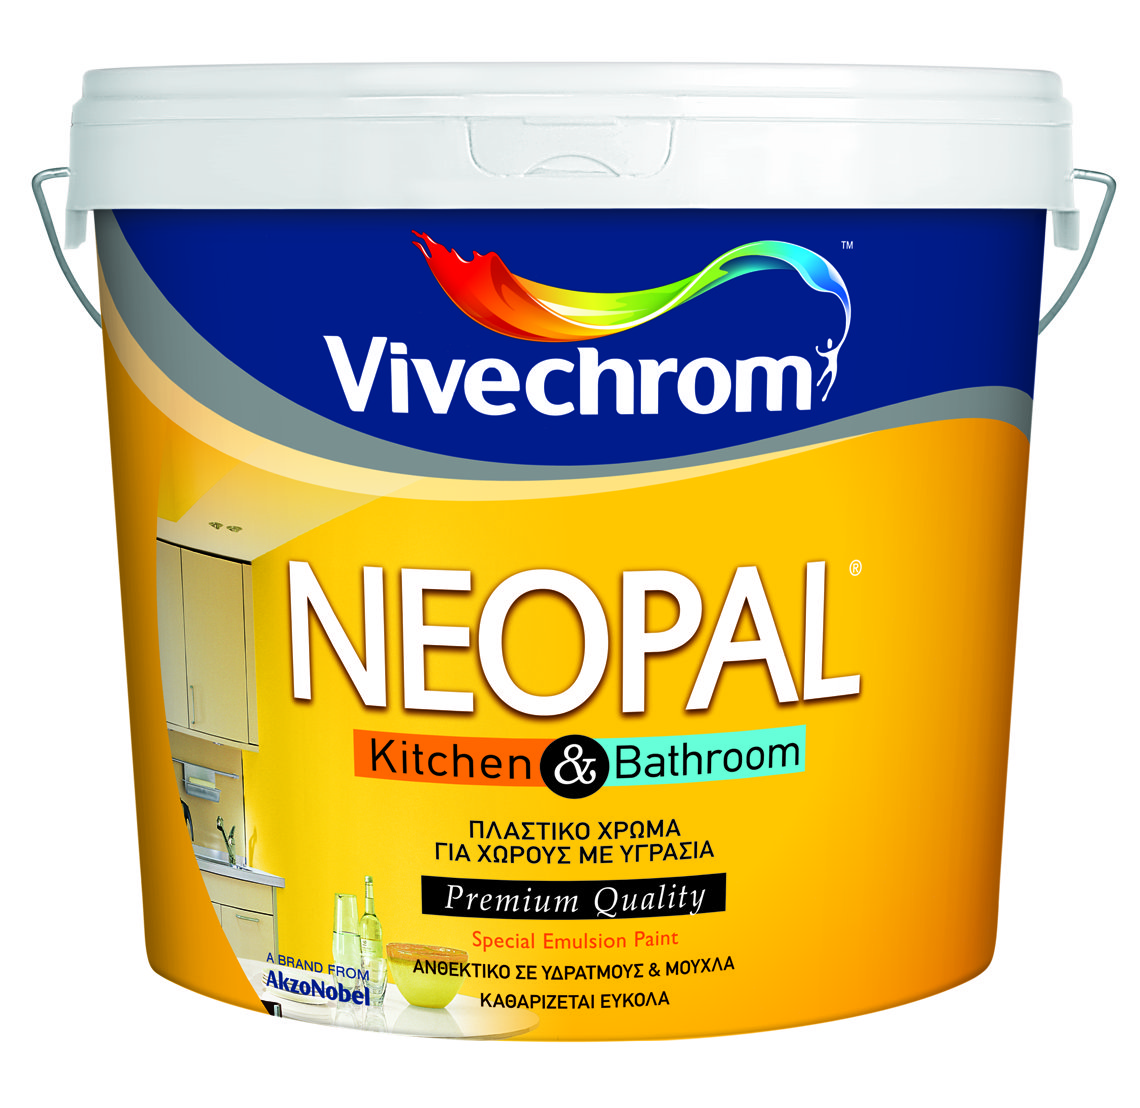 Vivechrom Neopal Kitchen & Bathroom Αντιμικροβιακό Χρώμα για Χώρους με Υγρασία Λευκό 750ml